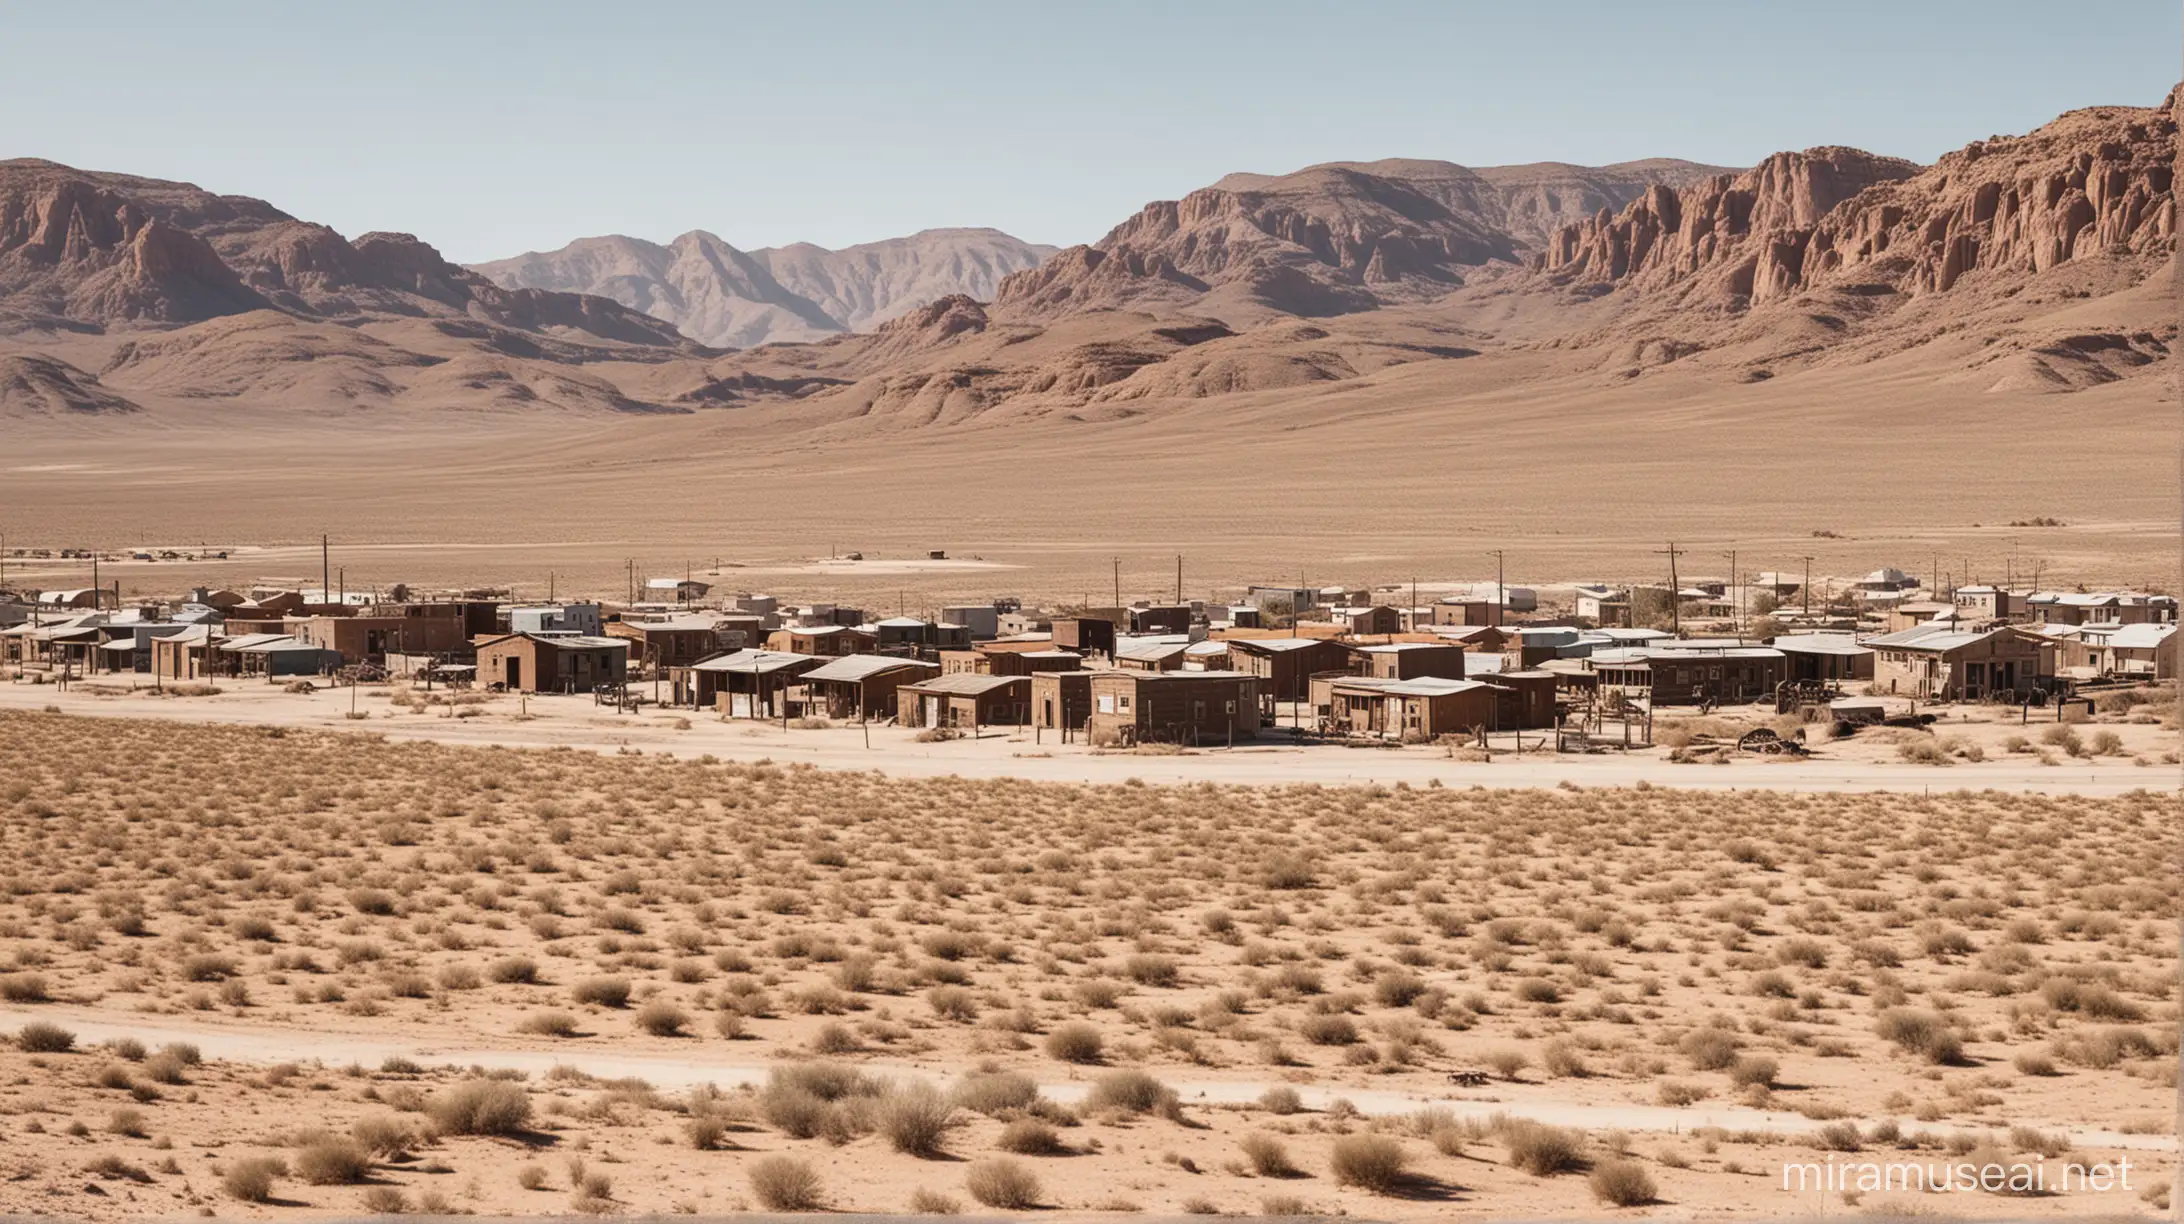 Desert Ghost Town Abandoned Settlement in Remote Landscape